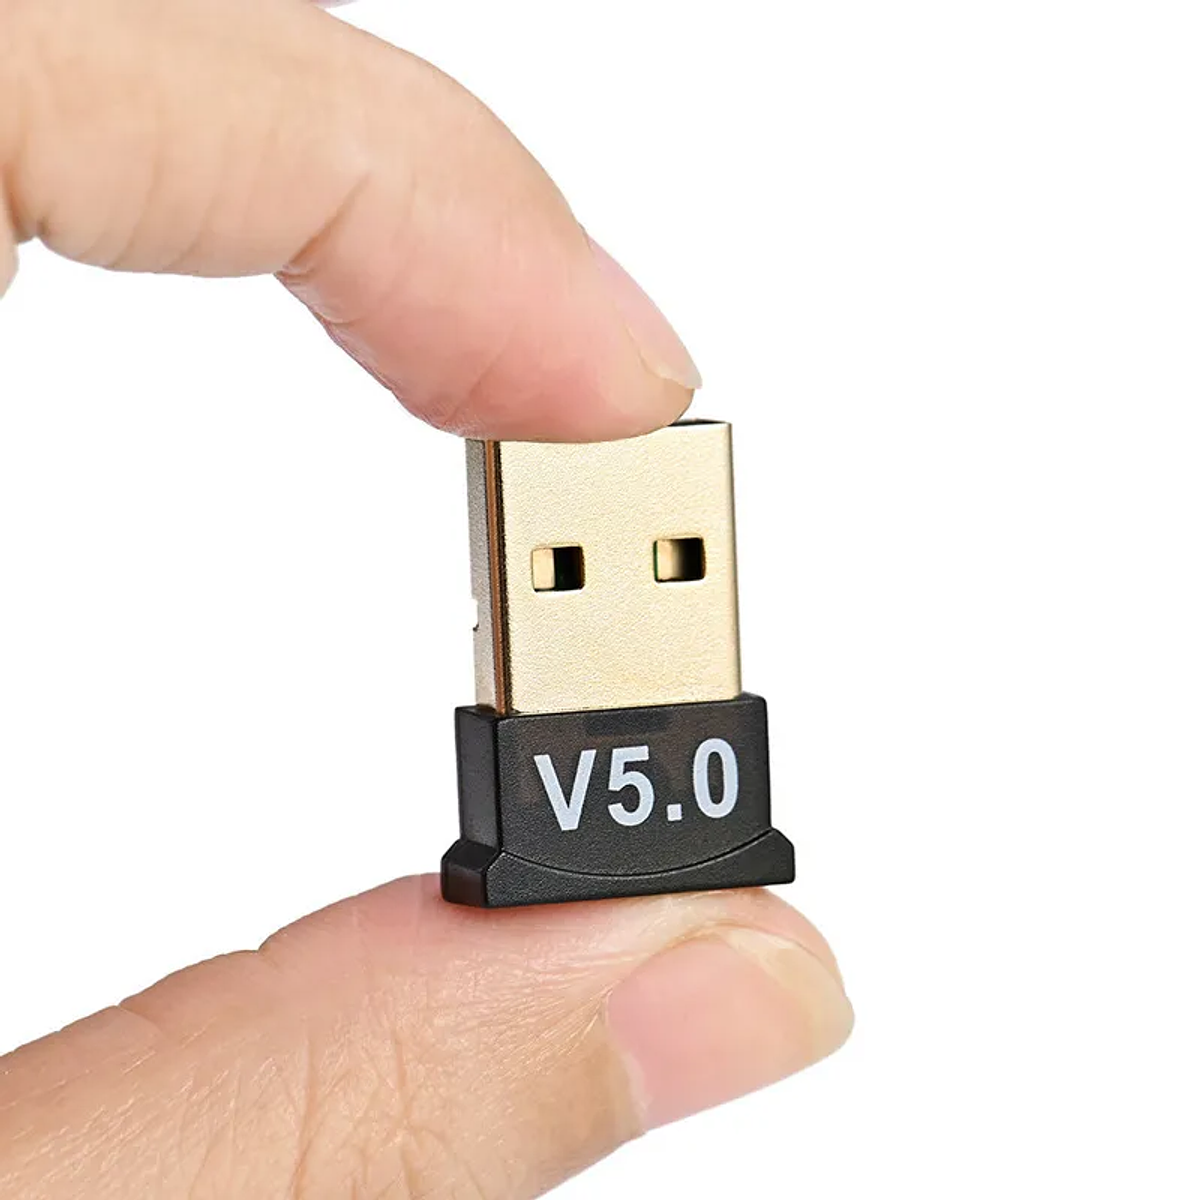 TRANSMISOR/RECEPTOR BLUETOOTH 5.0 USB